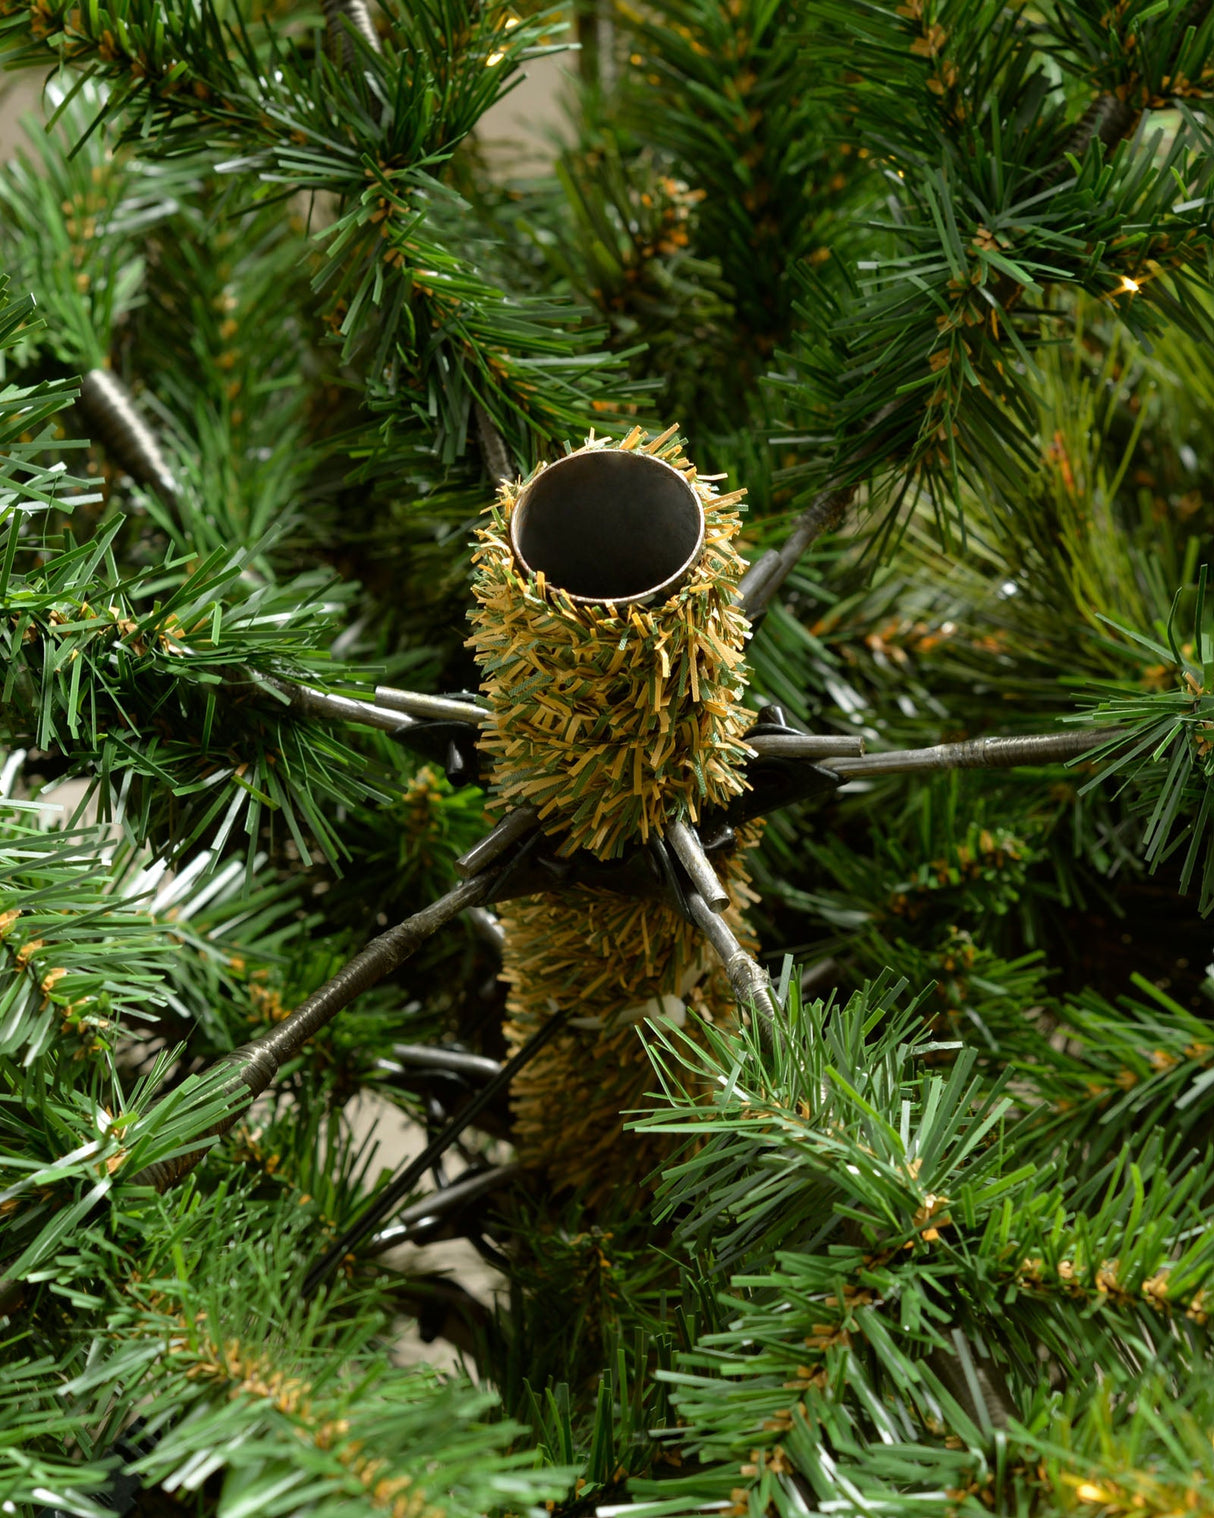 Pre-Lit Empress Pine Multi-Function Christmas Tree, 7 ft